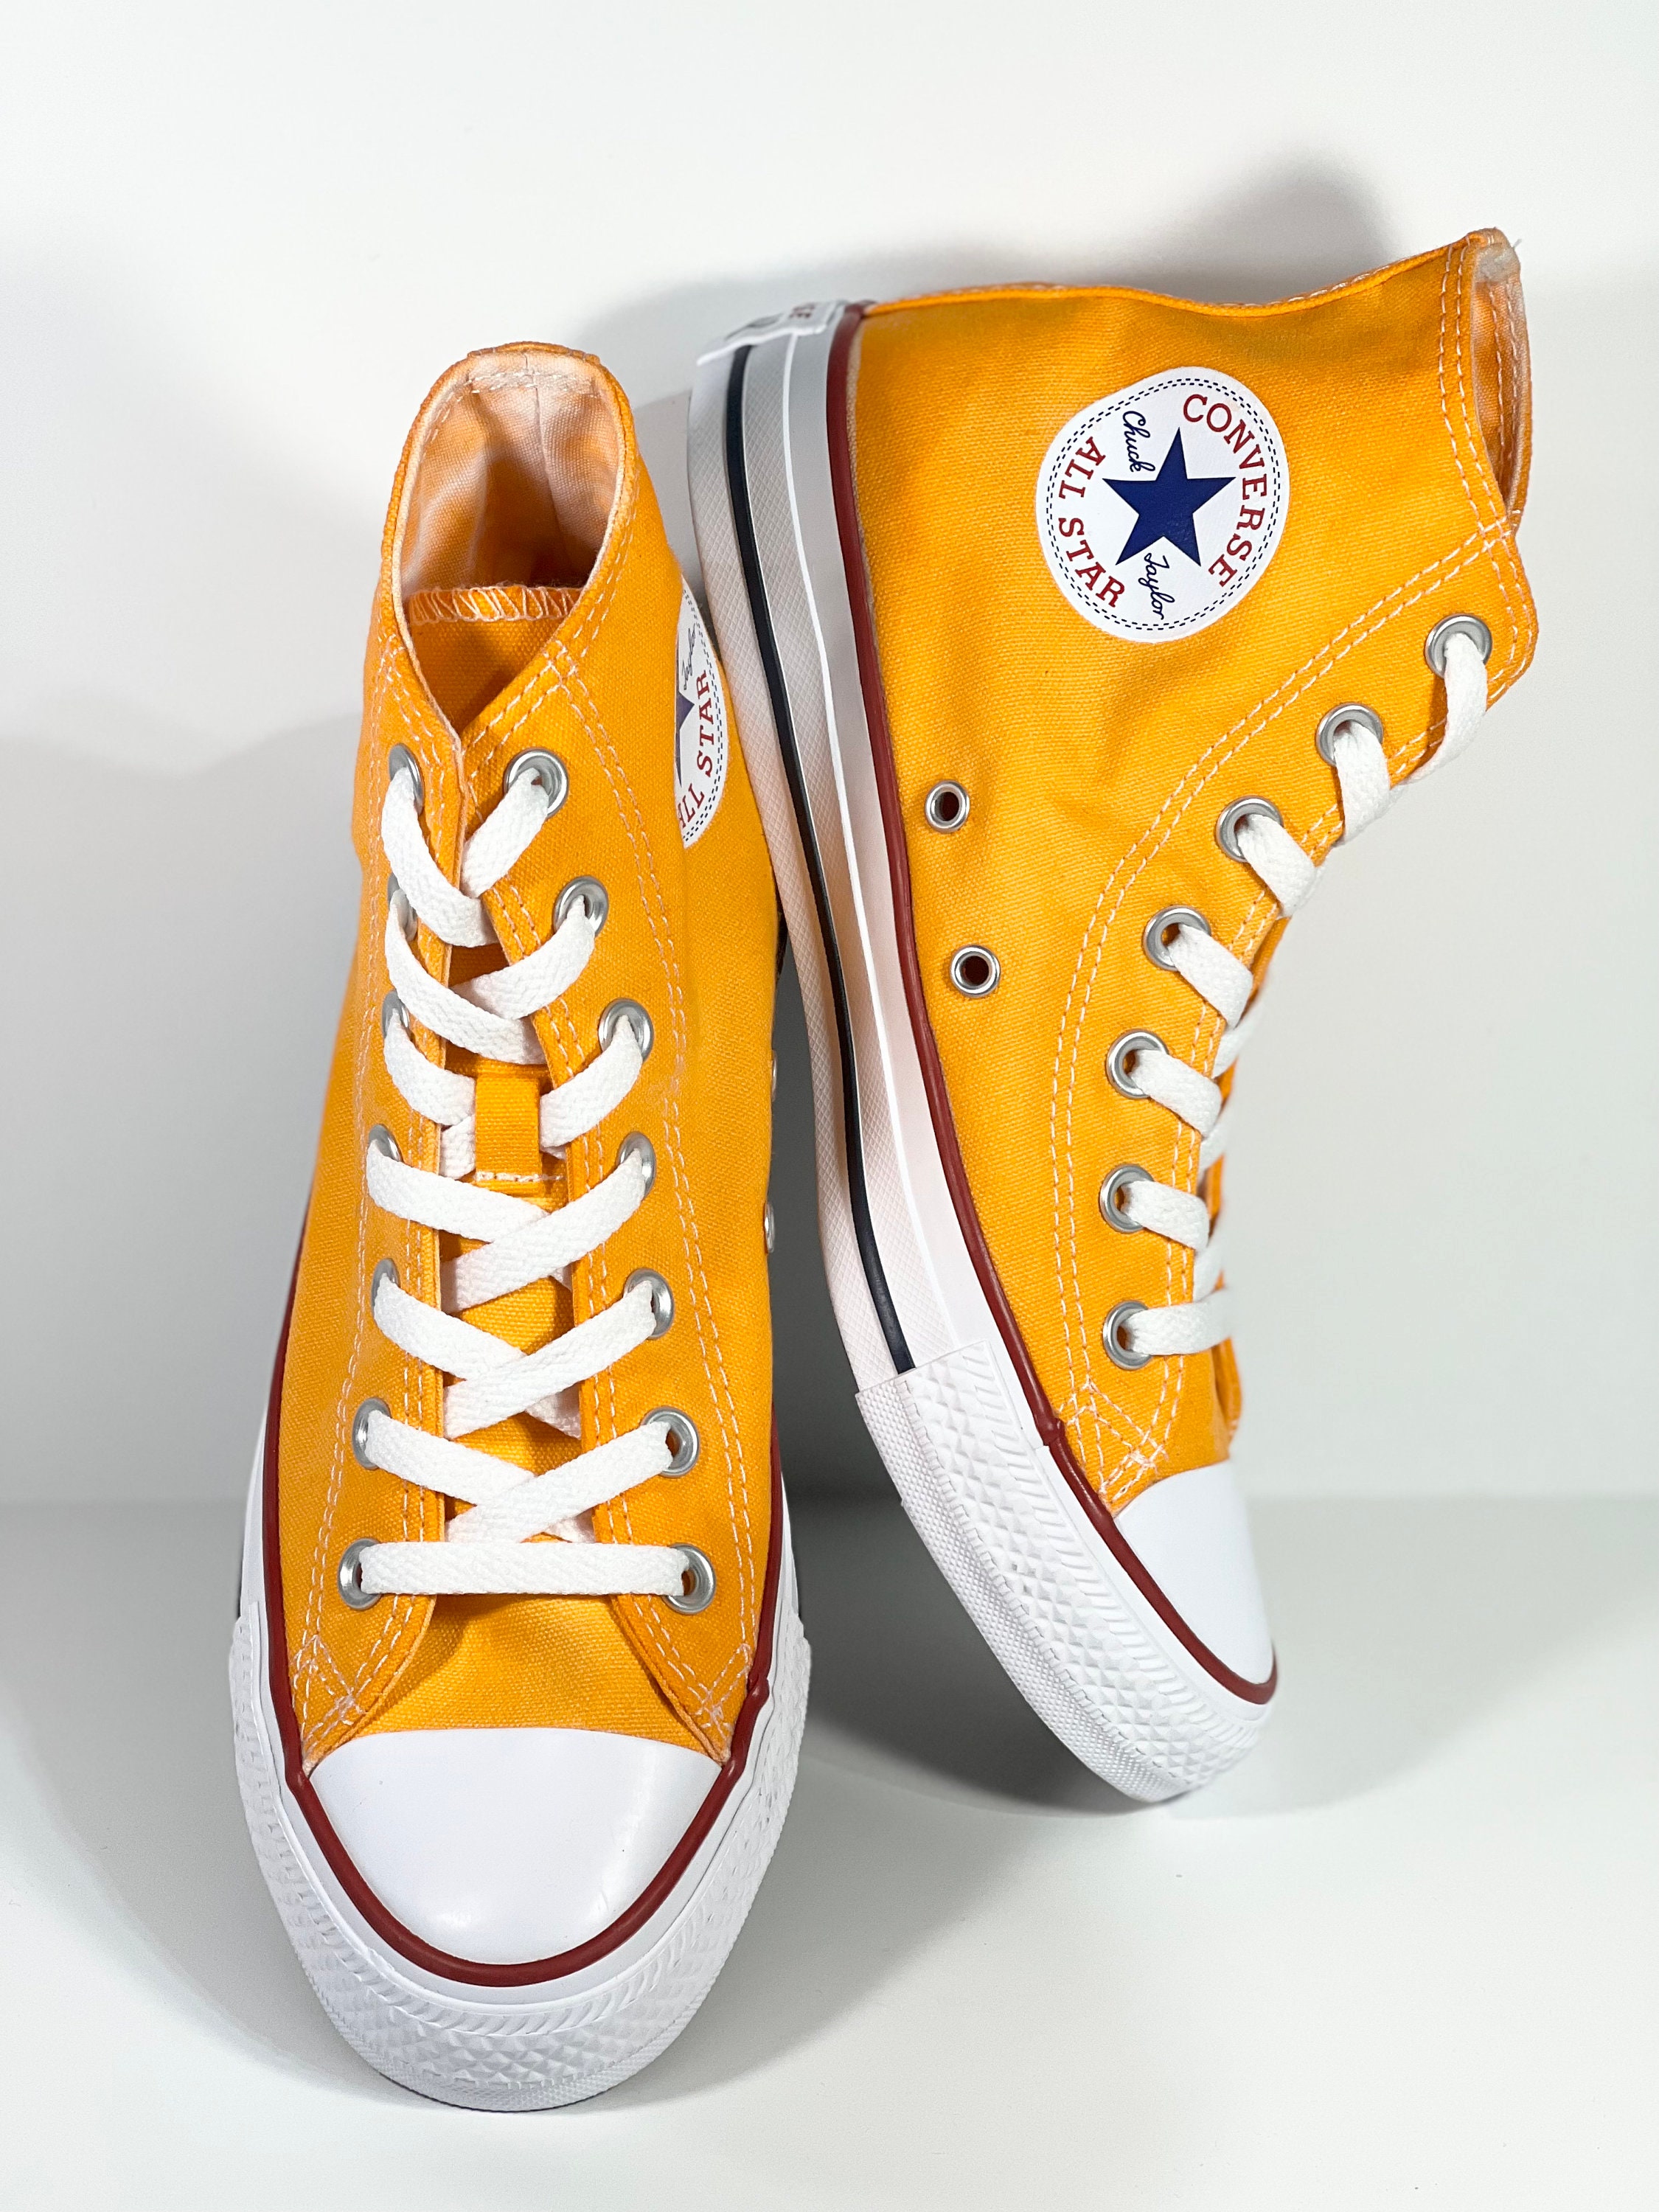 Seneste nyt telegram ske Custom Dyed Bright Orange Converse All Star High Tops Shoes - Etsy